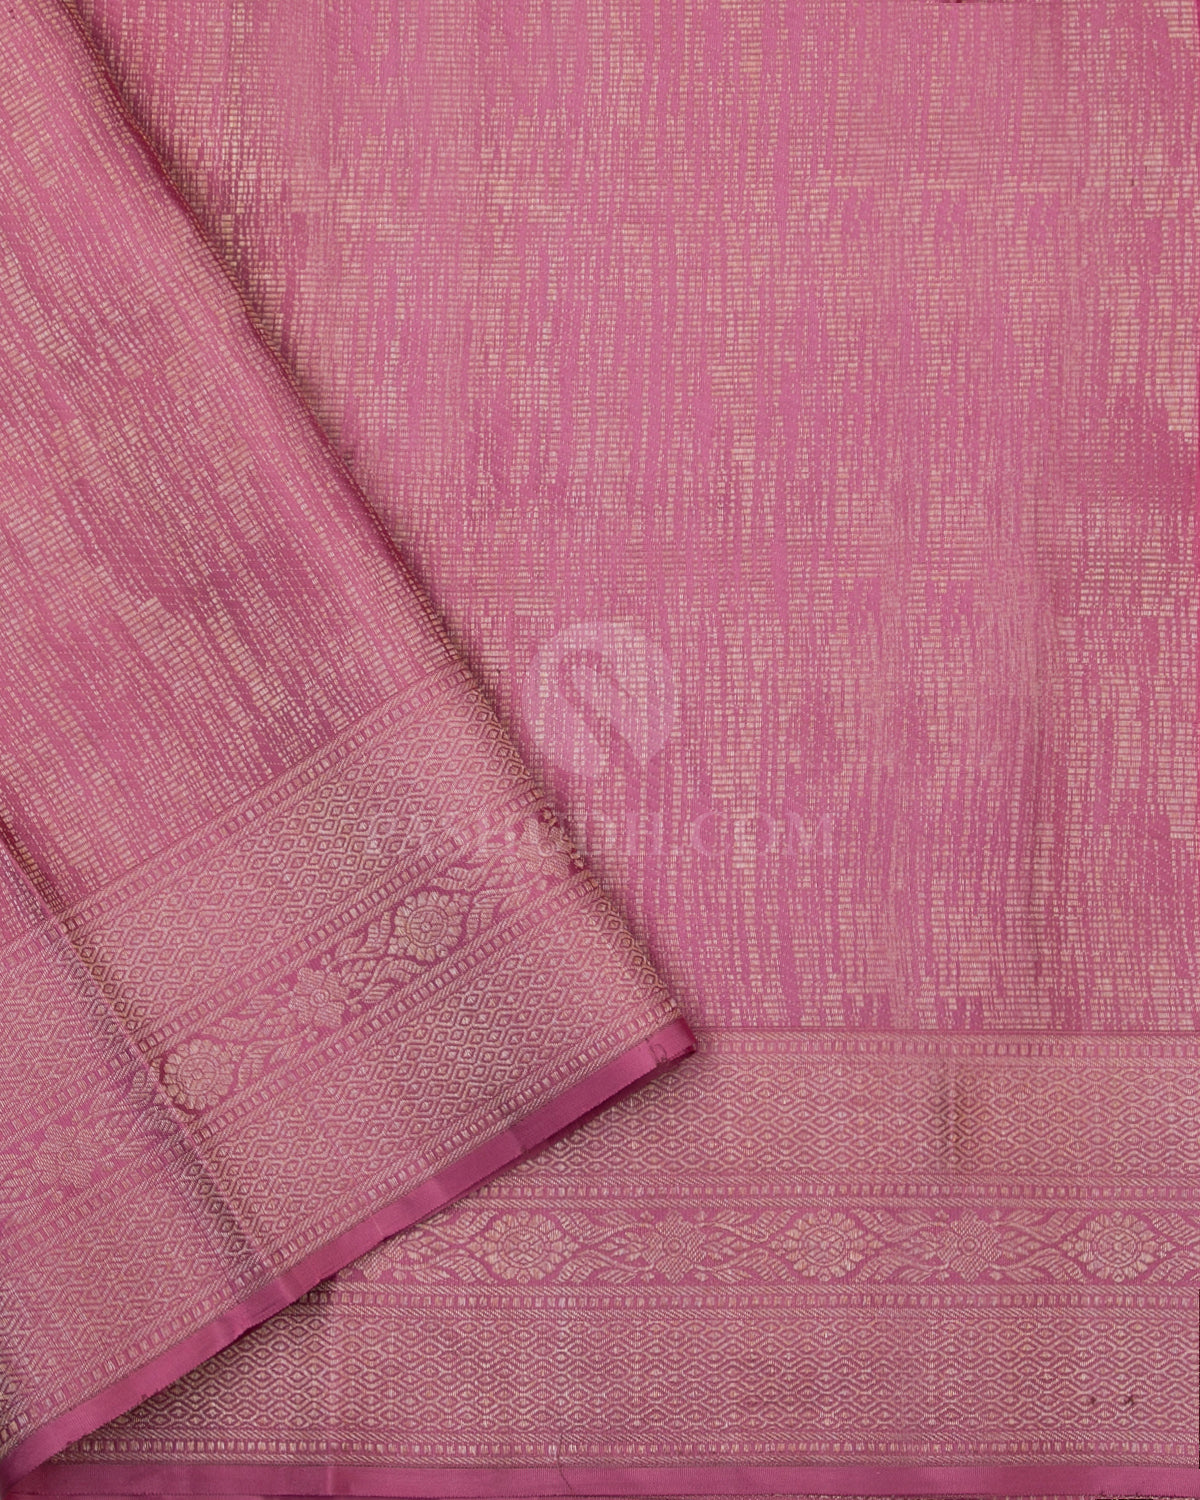 Brown and Pink Kanjivaram Silk Saree - DT197 - View 3